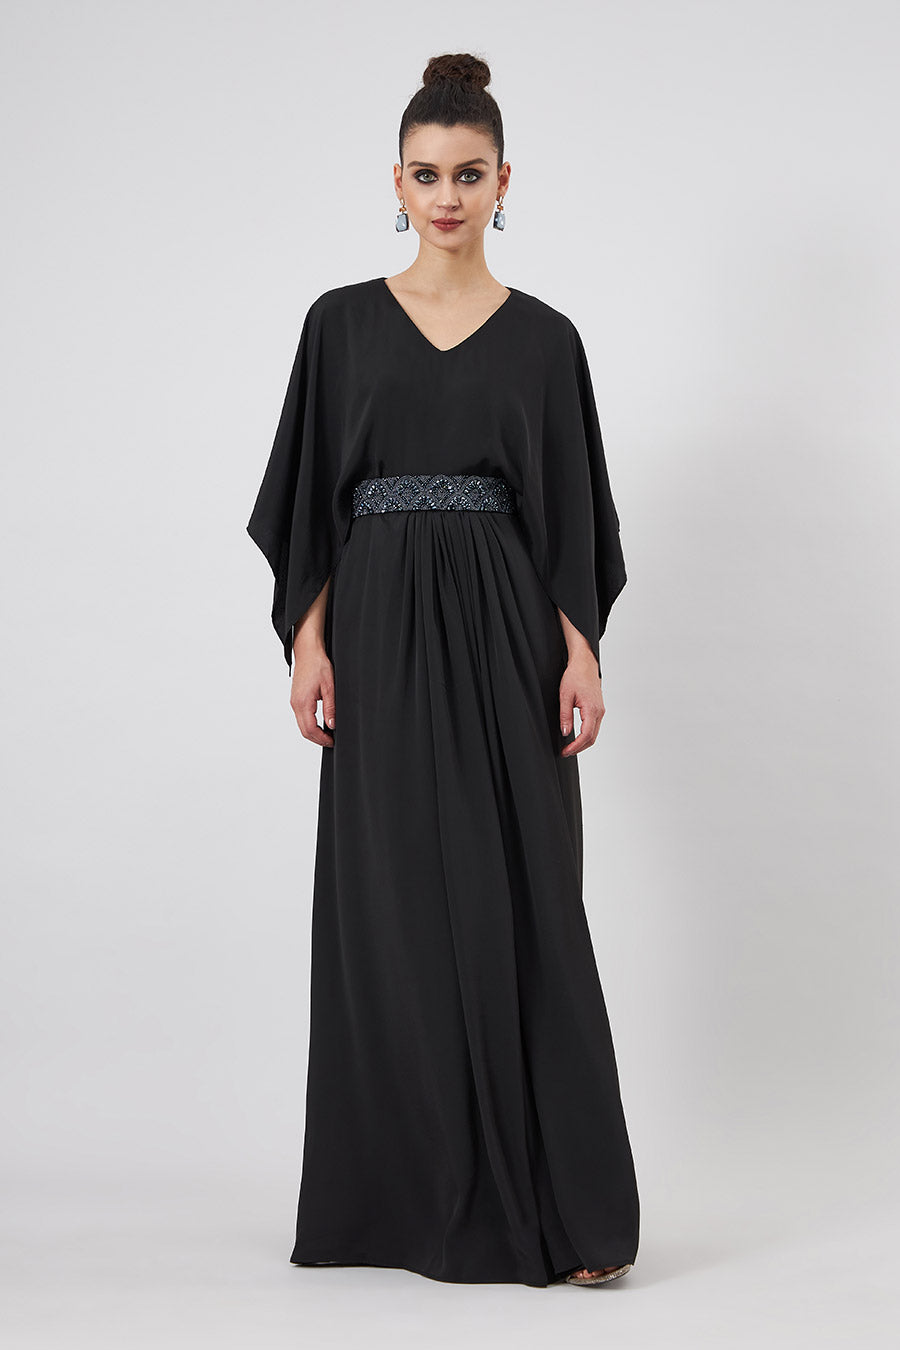 Black Drape Dress With Emebllished Belt